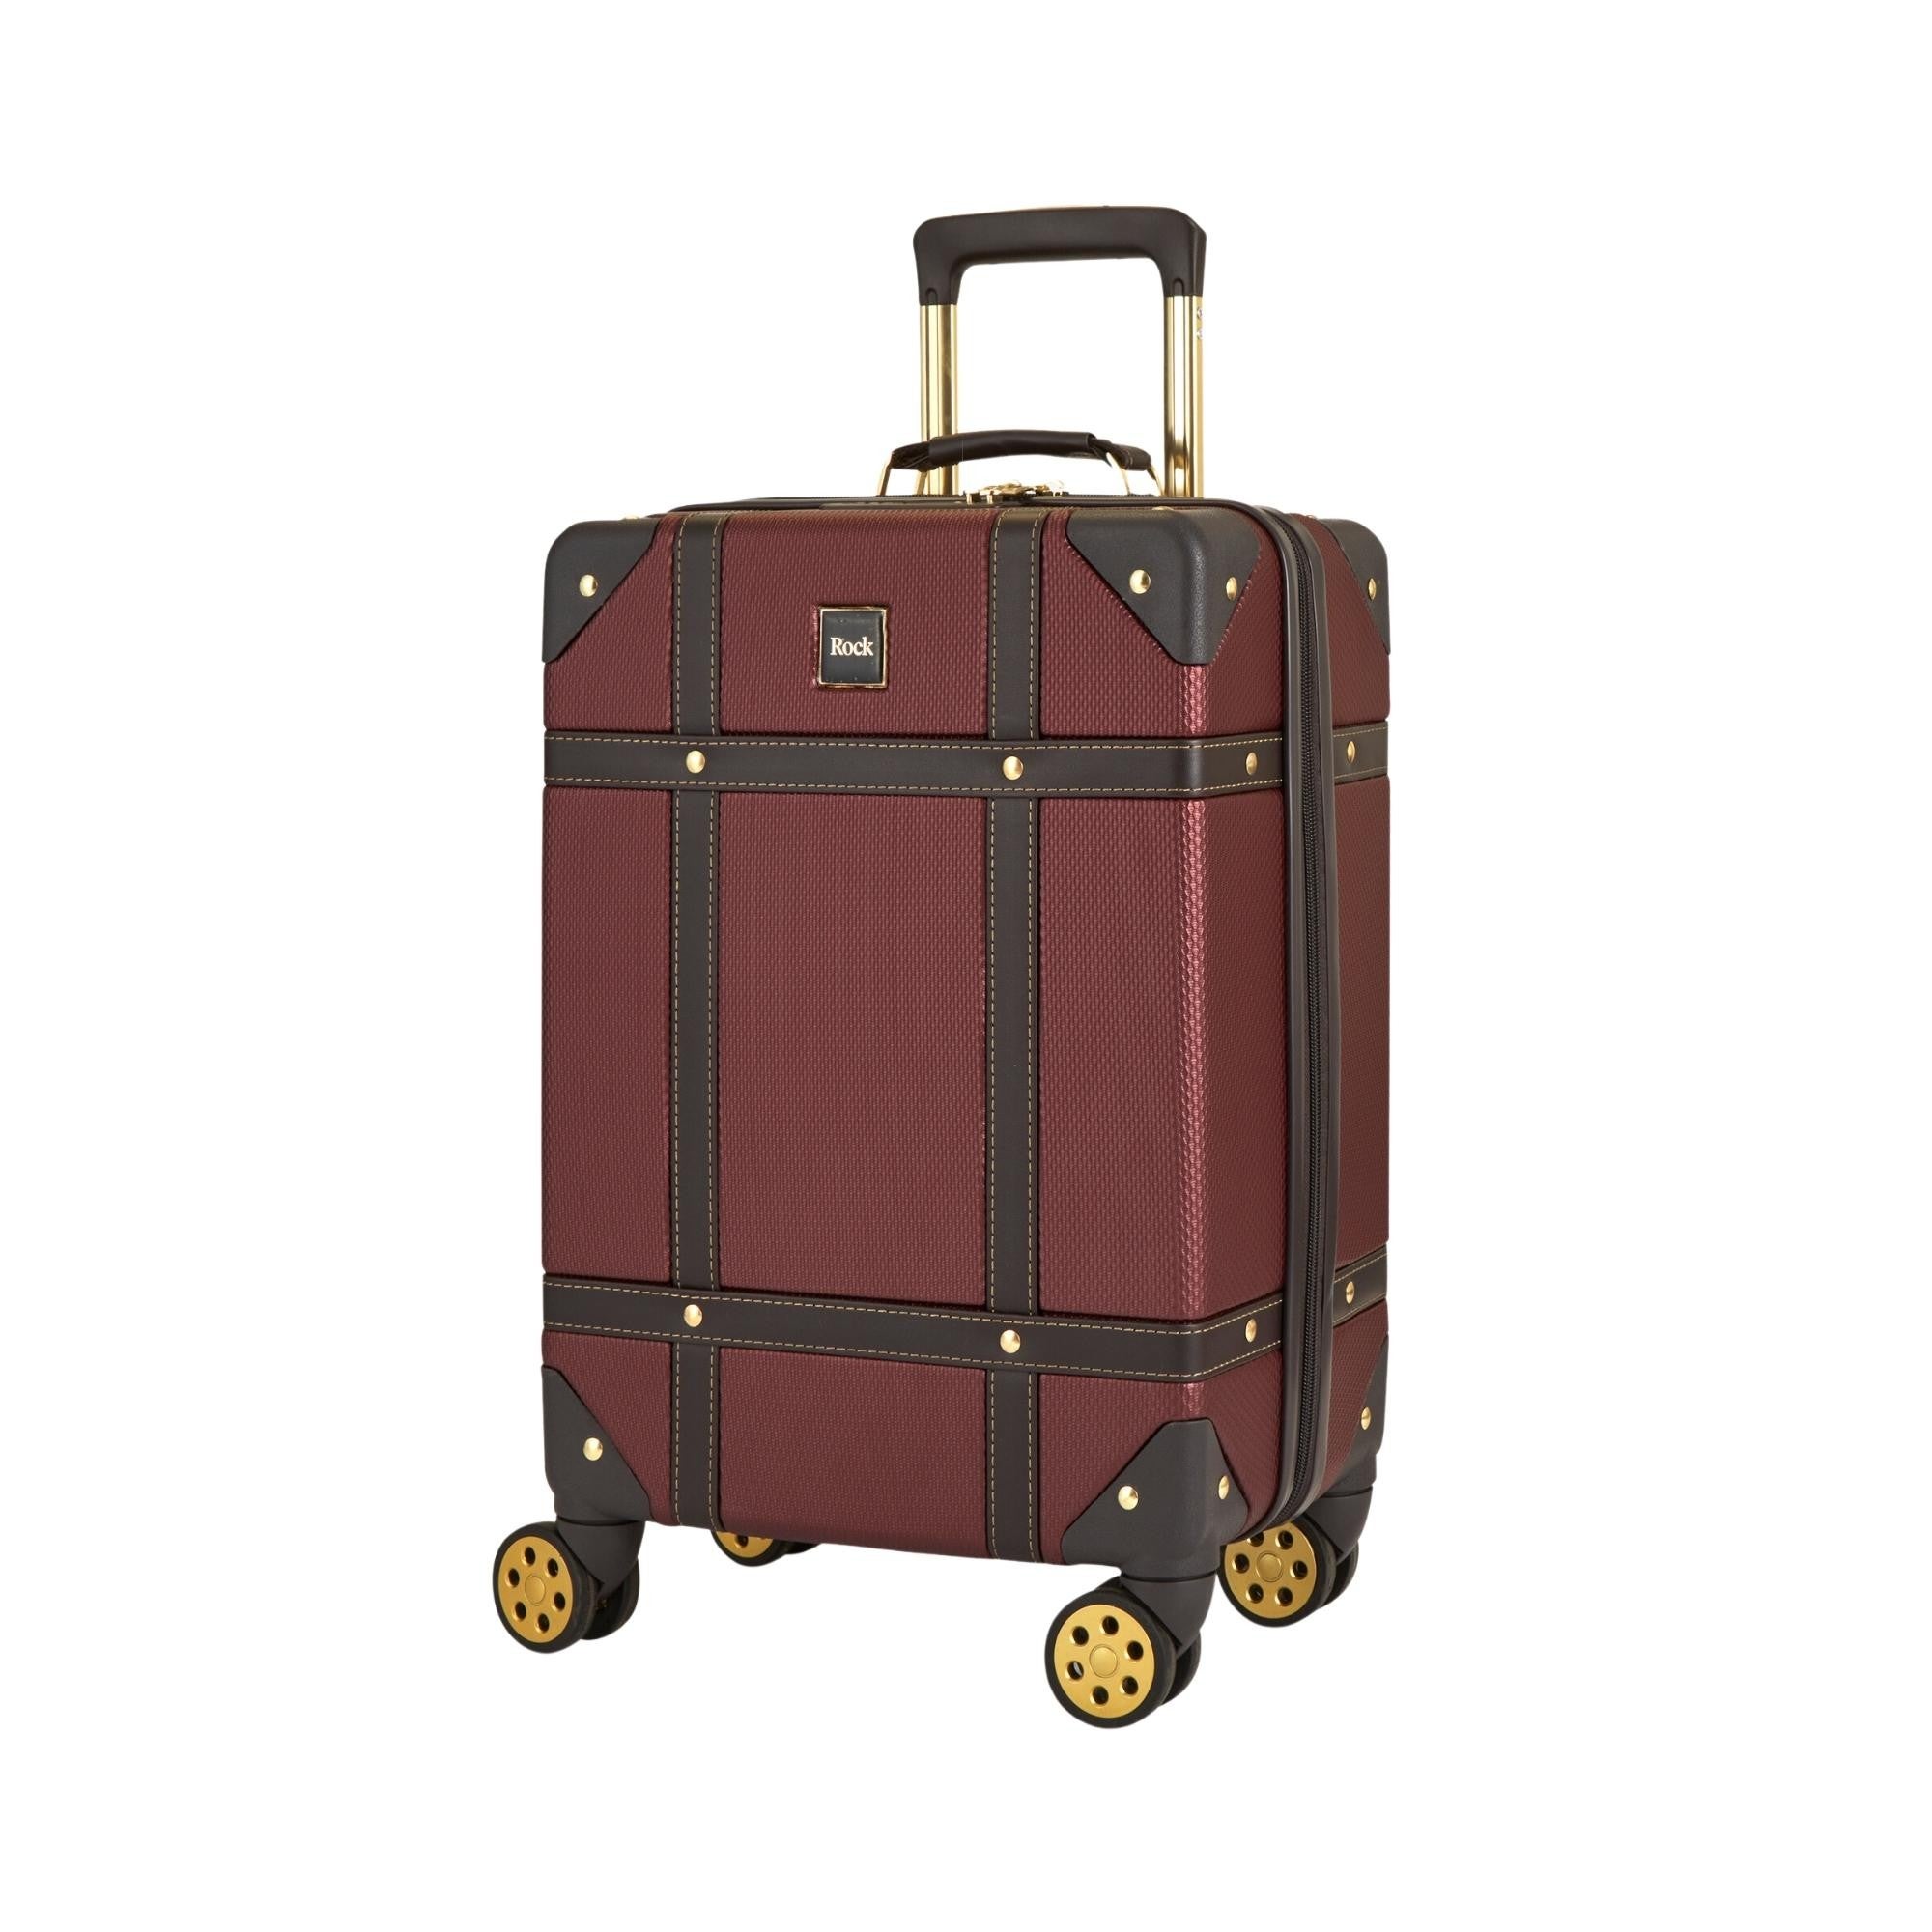 Rock Luggage Vintage Suitcase